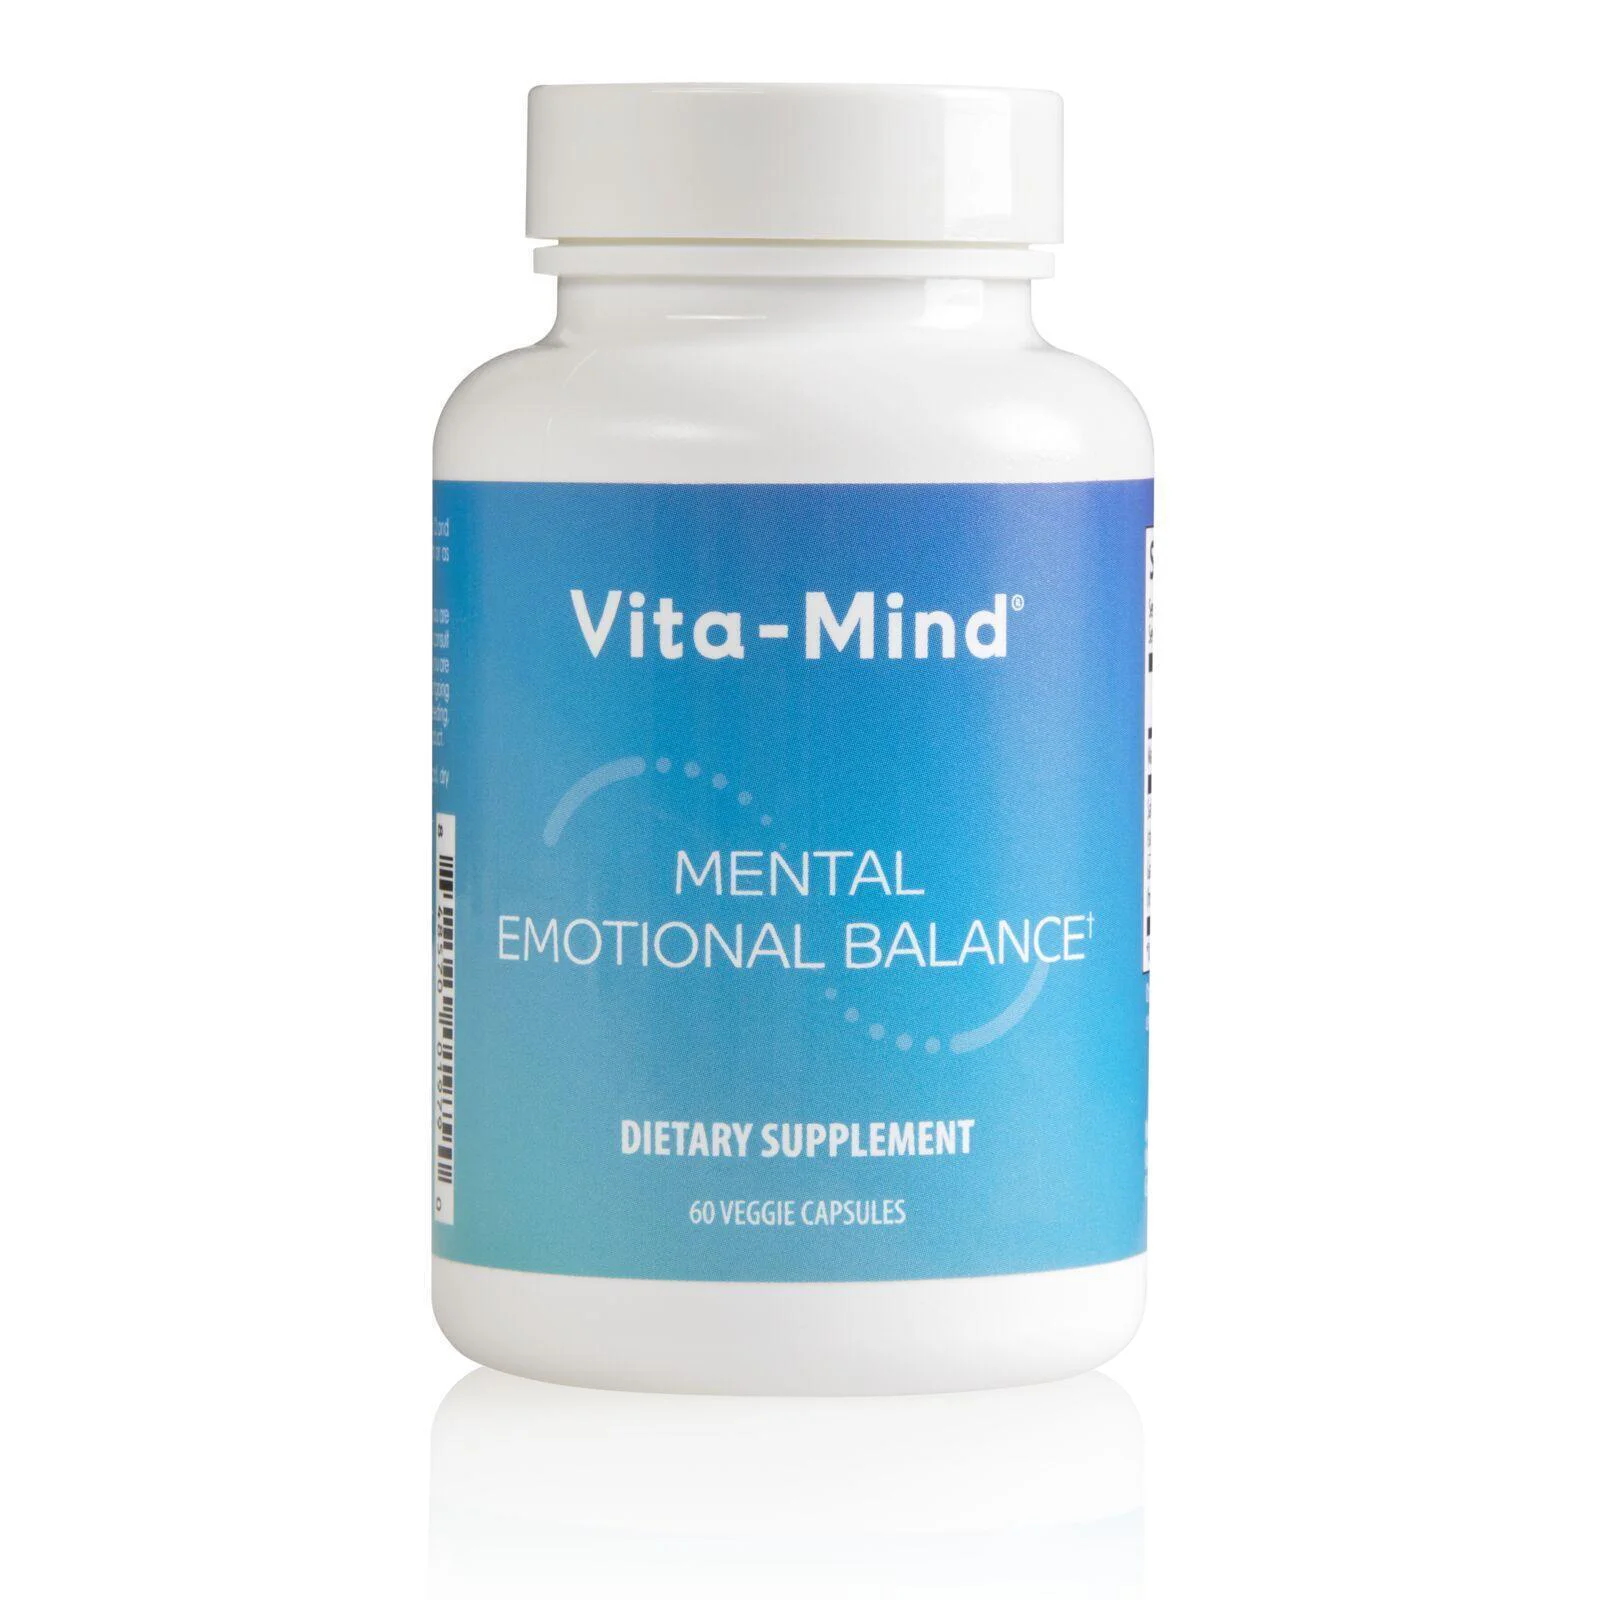 Vita-Mind Mental Emotional Balance Formula